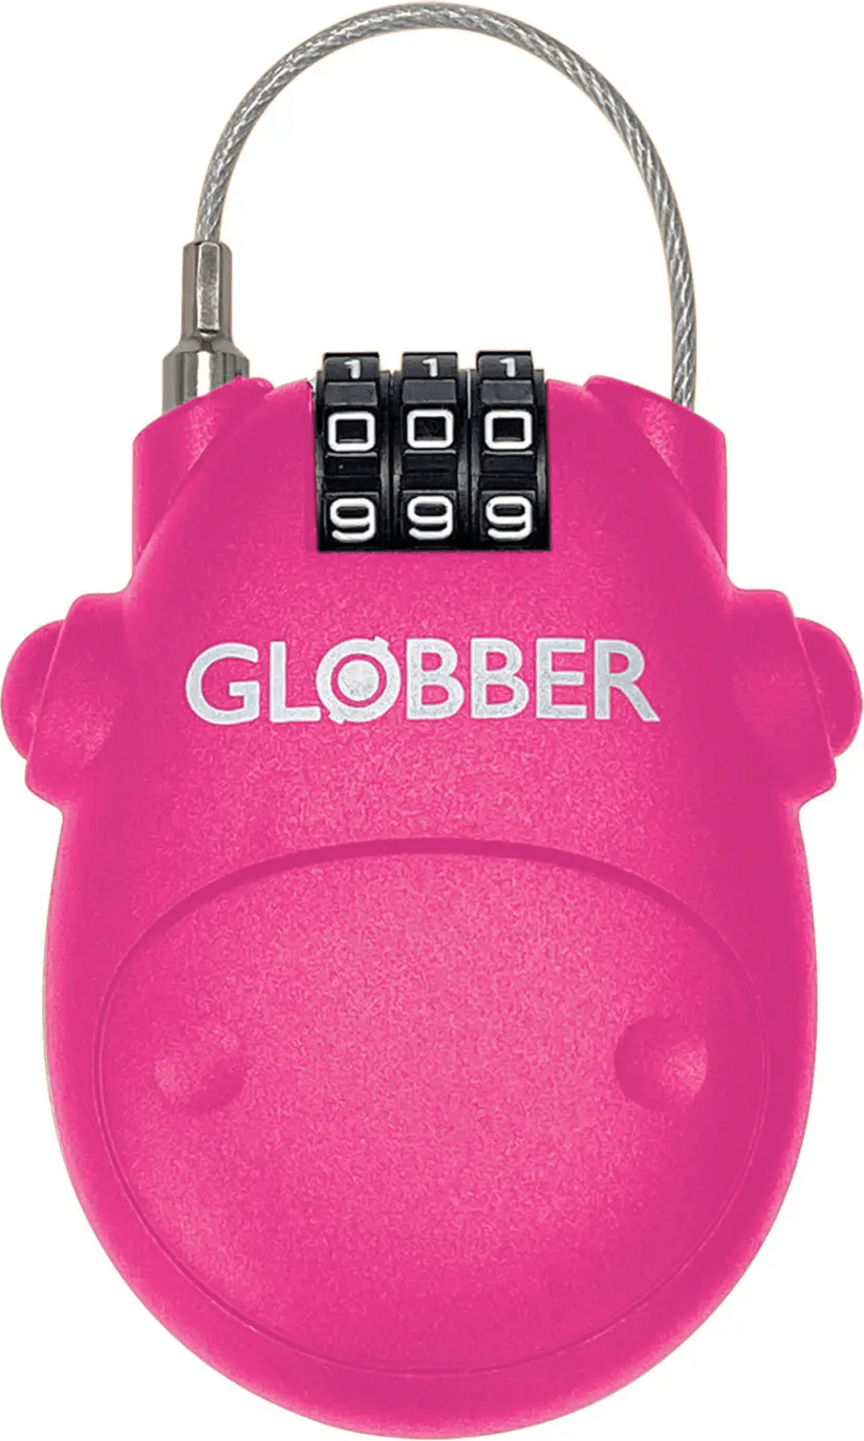 Globber Lock Pink lock